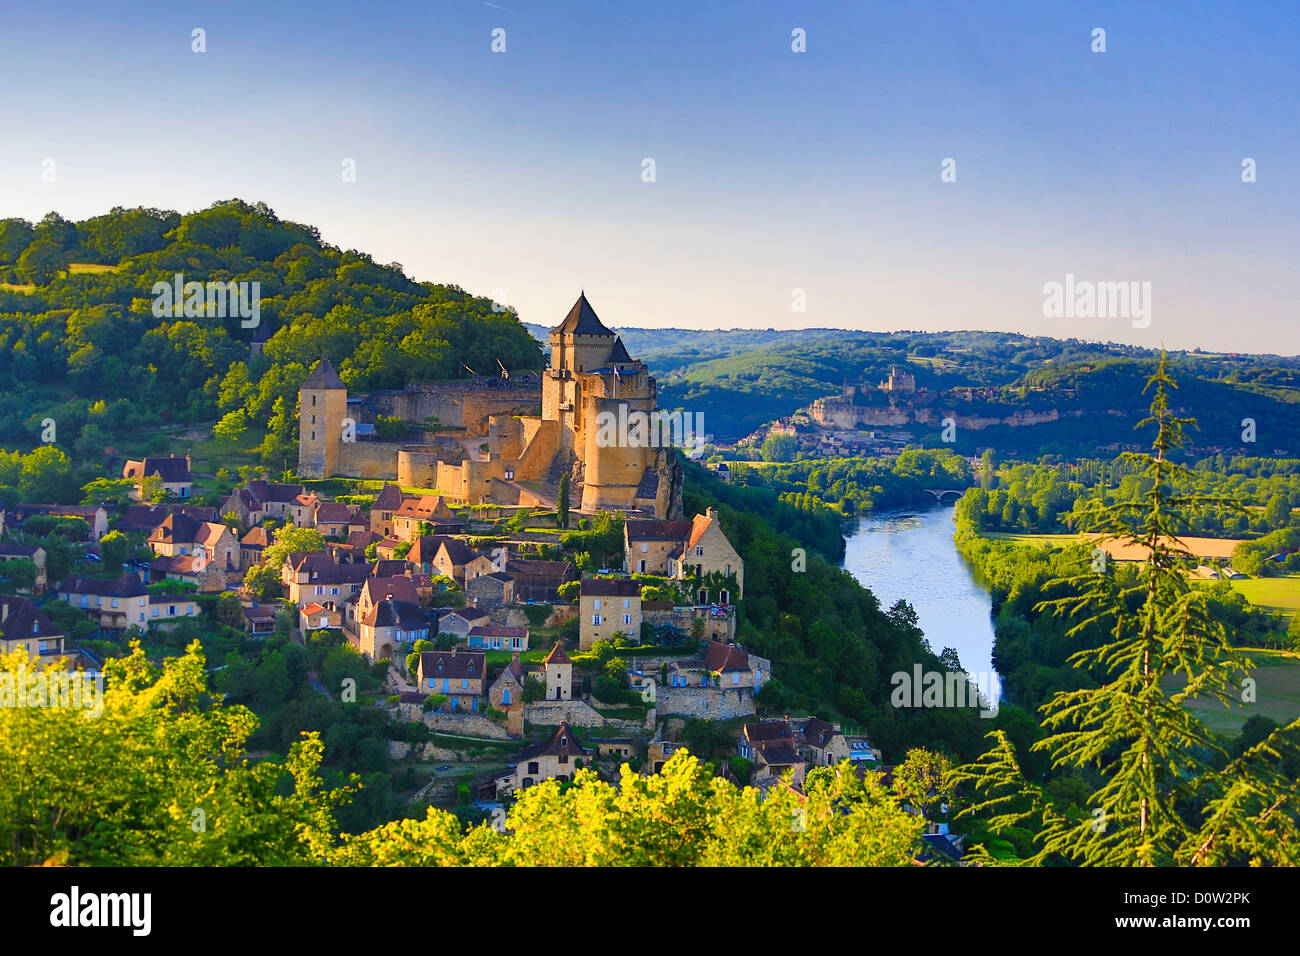 France, Europe, travel, Dordogne, Castelnaud, Milandes, Castle, architecture, medieval, skyline, steep, rocks, tower, traditiona Stock Photo